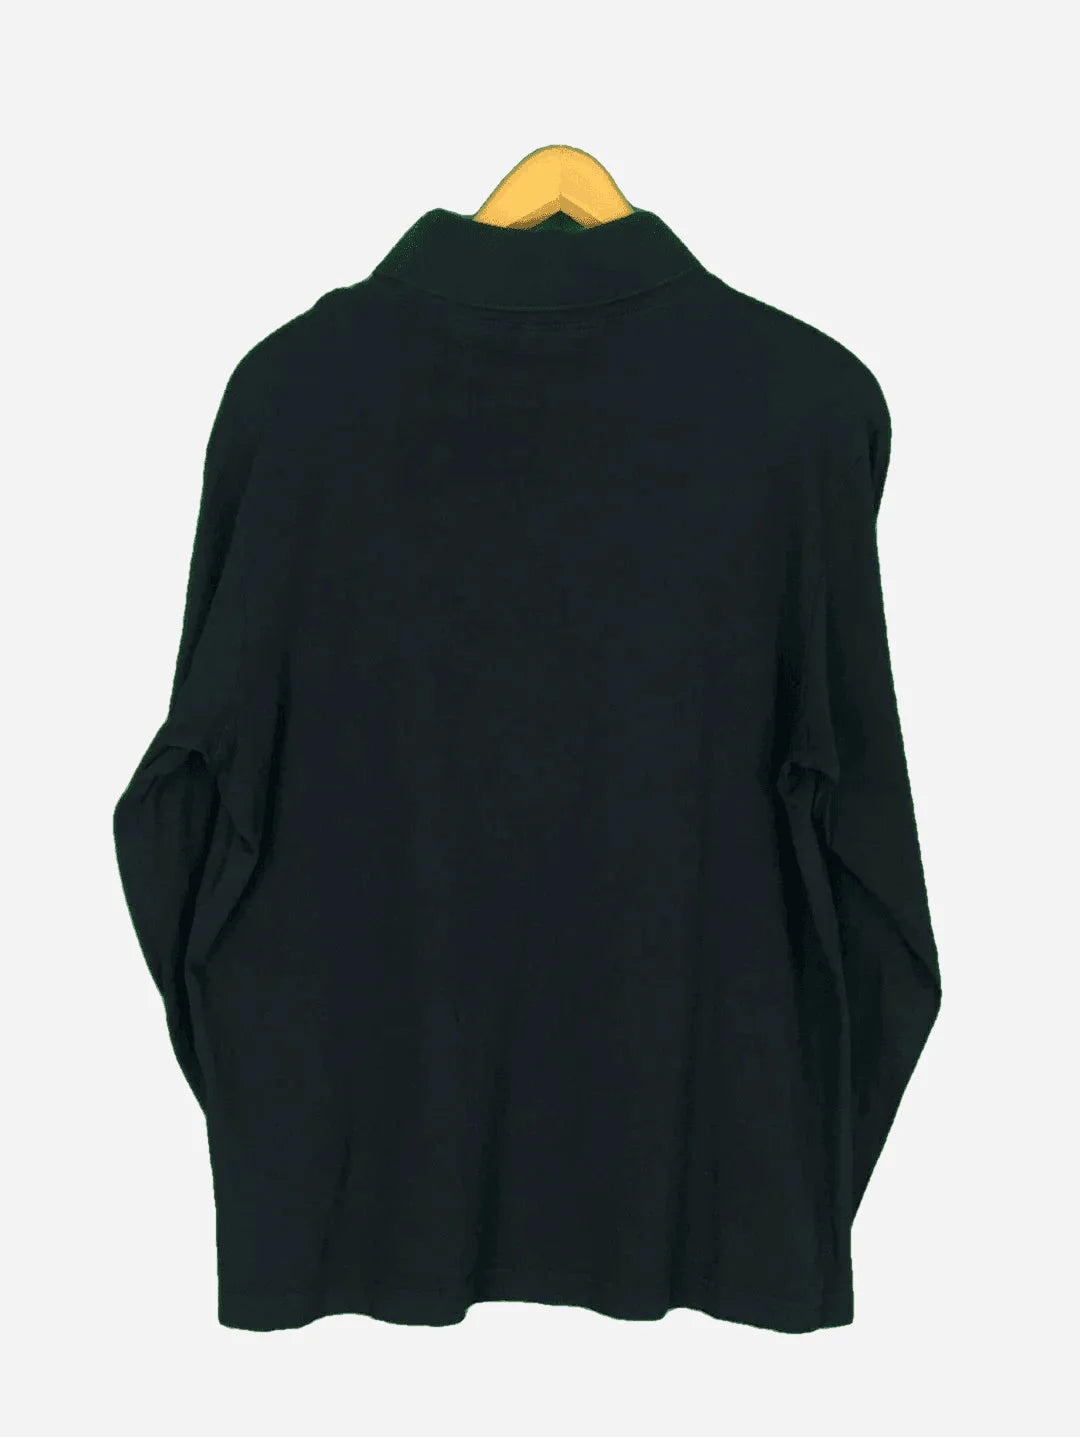 Kappa Turtleneck Sweater (M)